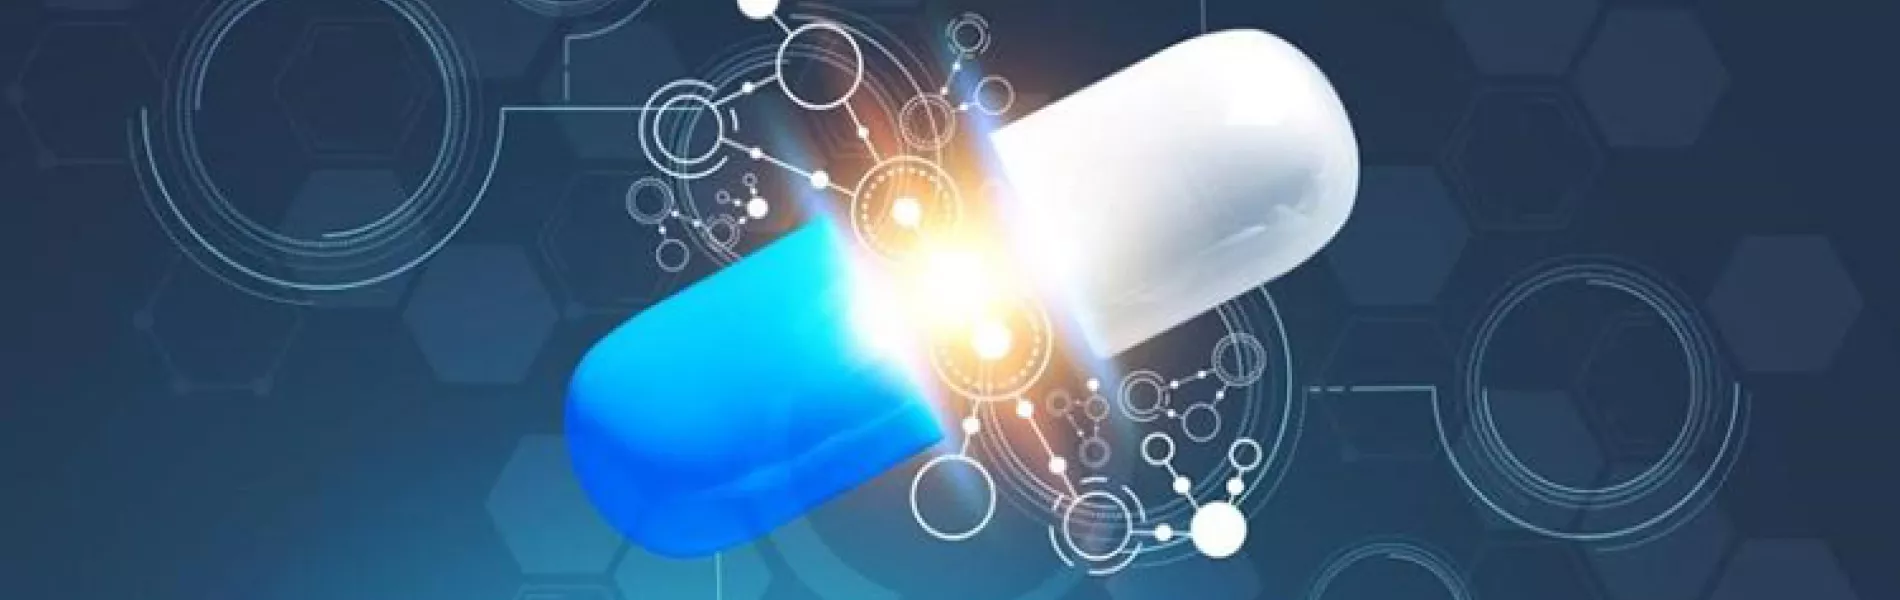 ISPE Accelerating Digital Transformation with Pharma 4.0 Initiative 